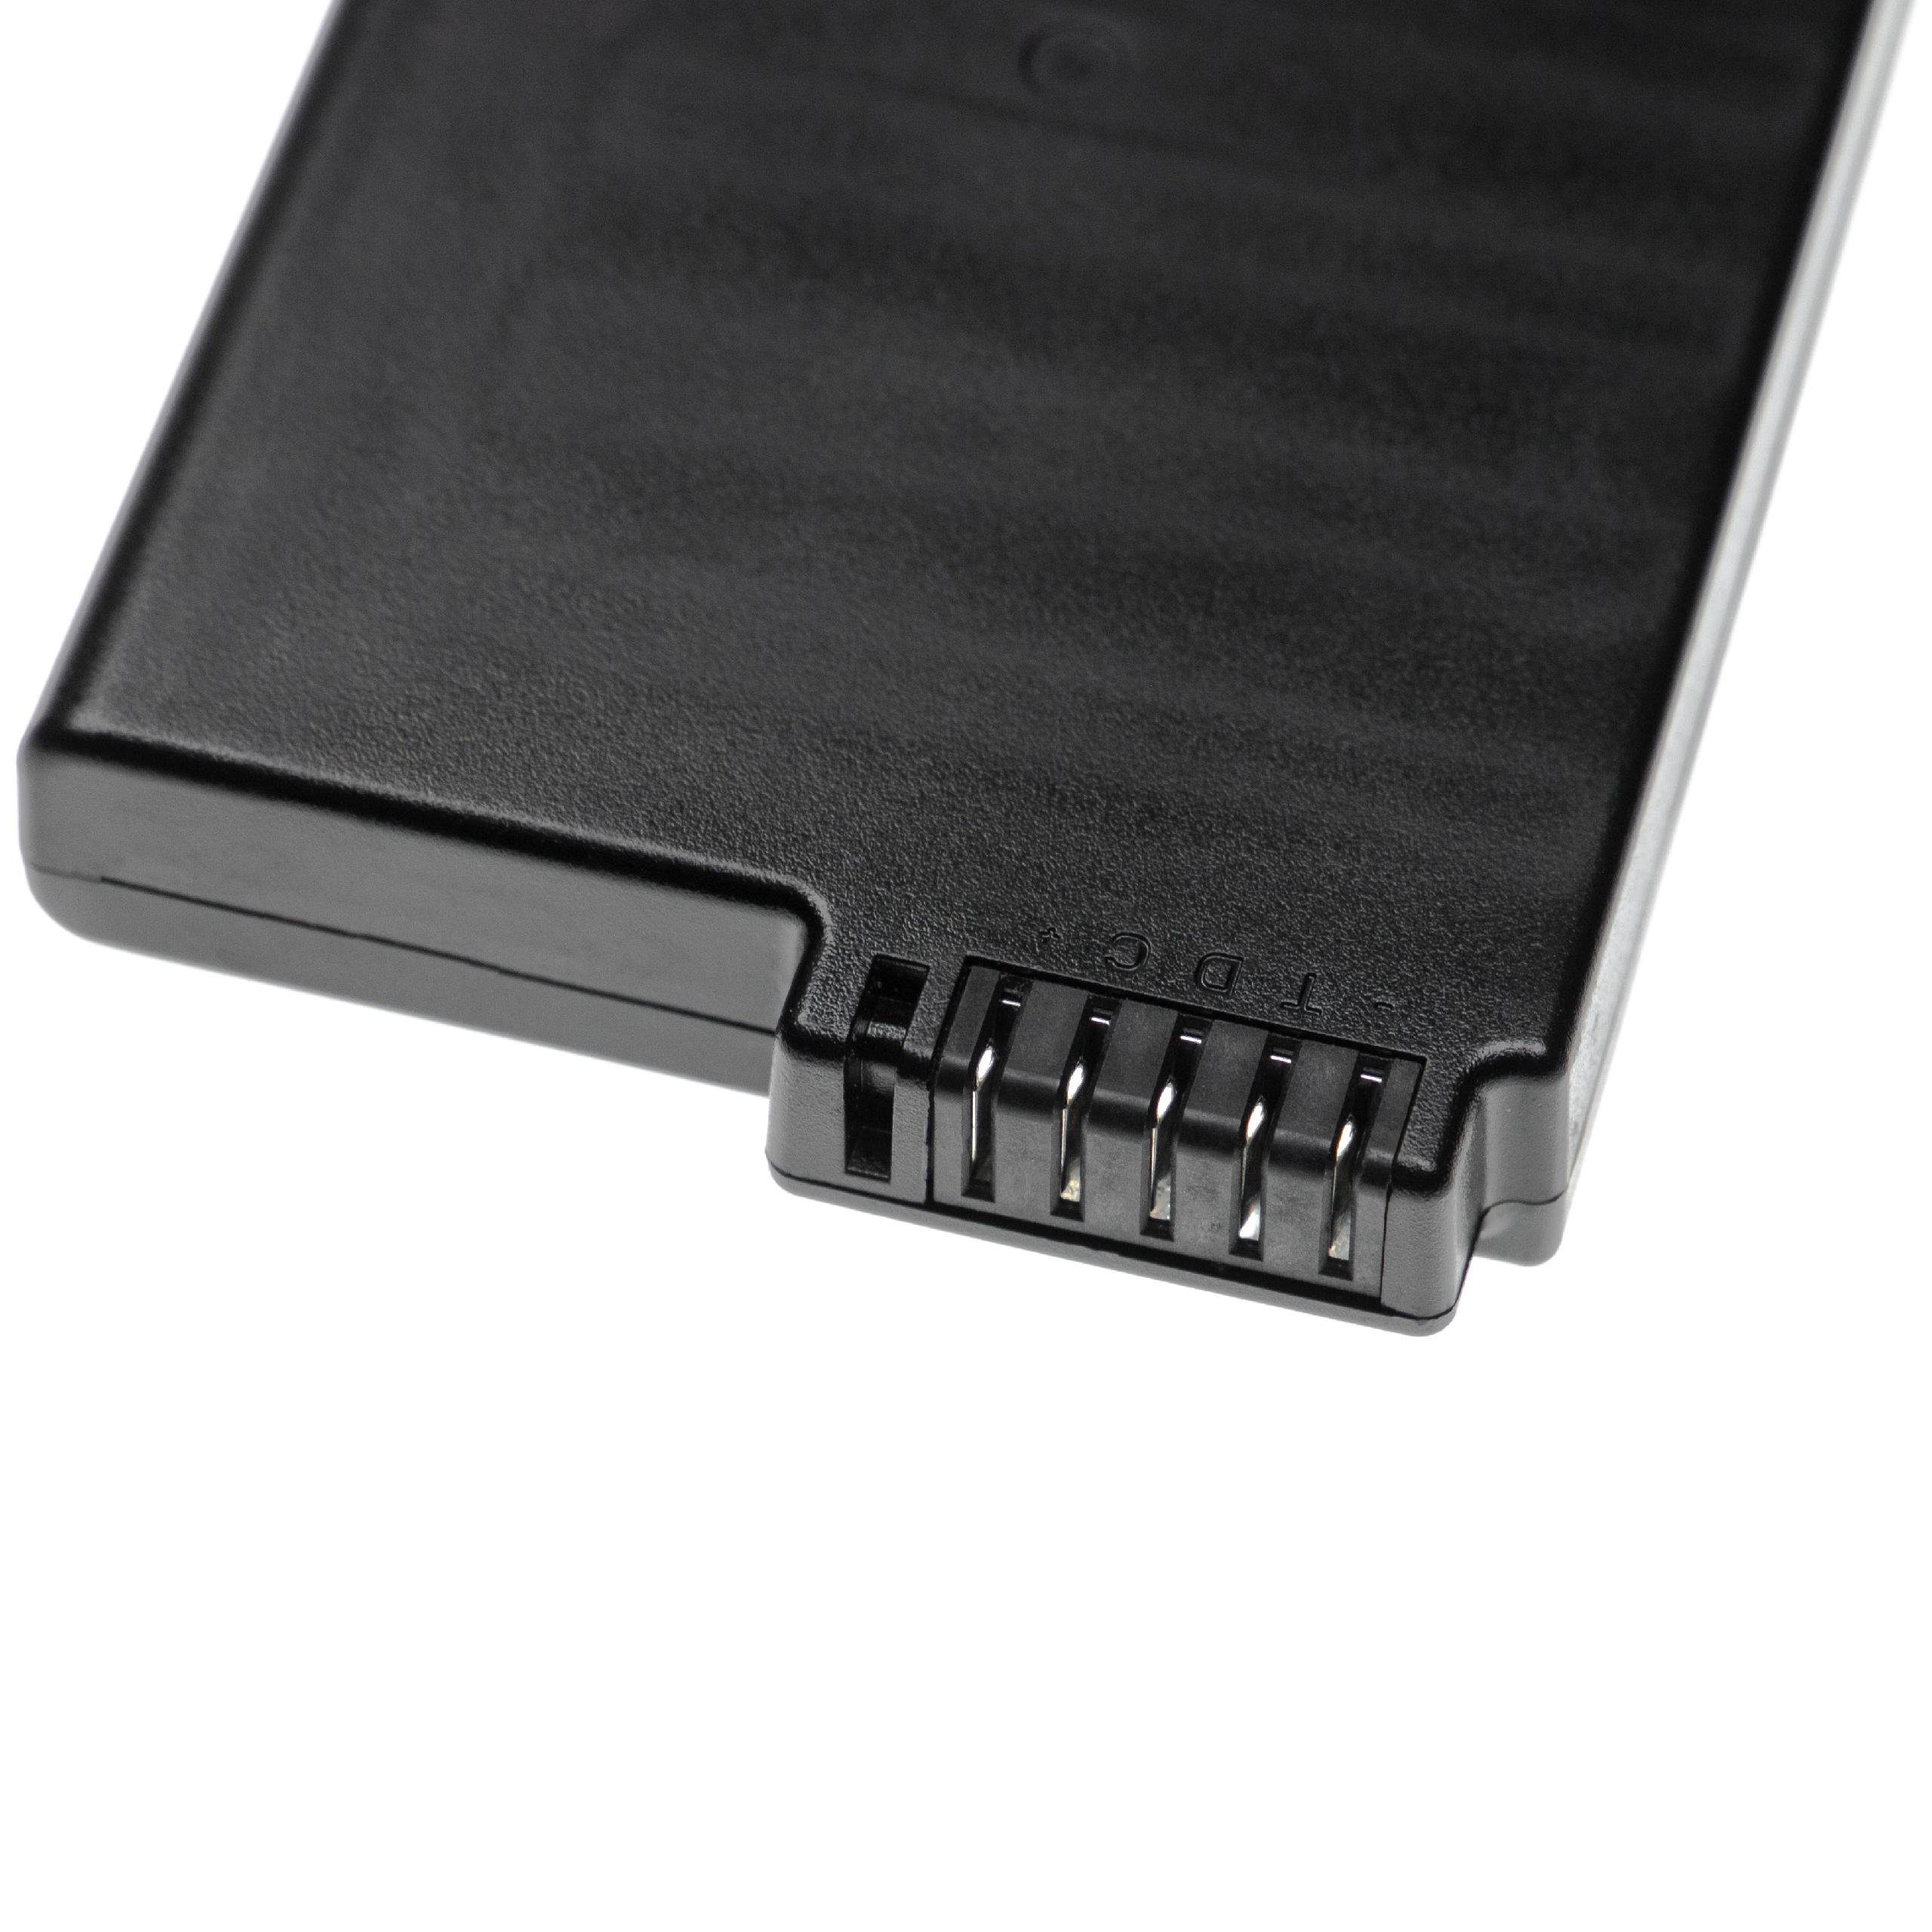 für passend Notebook Kiwi Netbook mAh / Laptop-Akku 8700 vhbw 820 / OpenNote Notebook Notebook